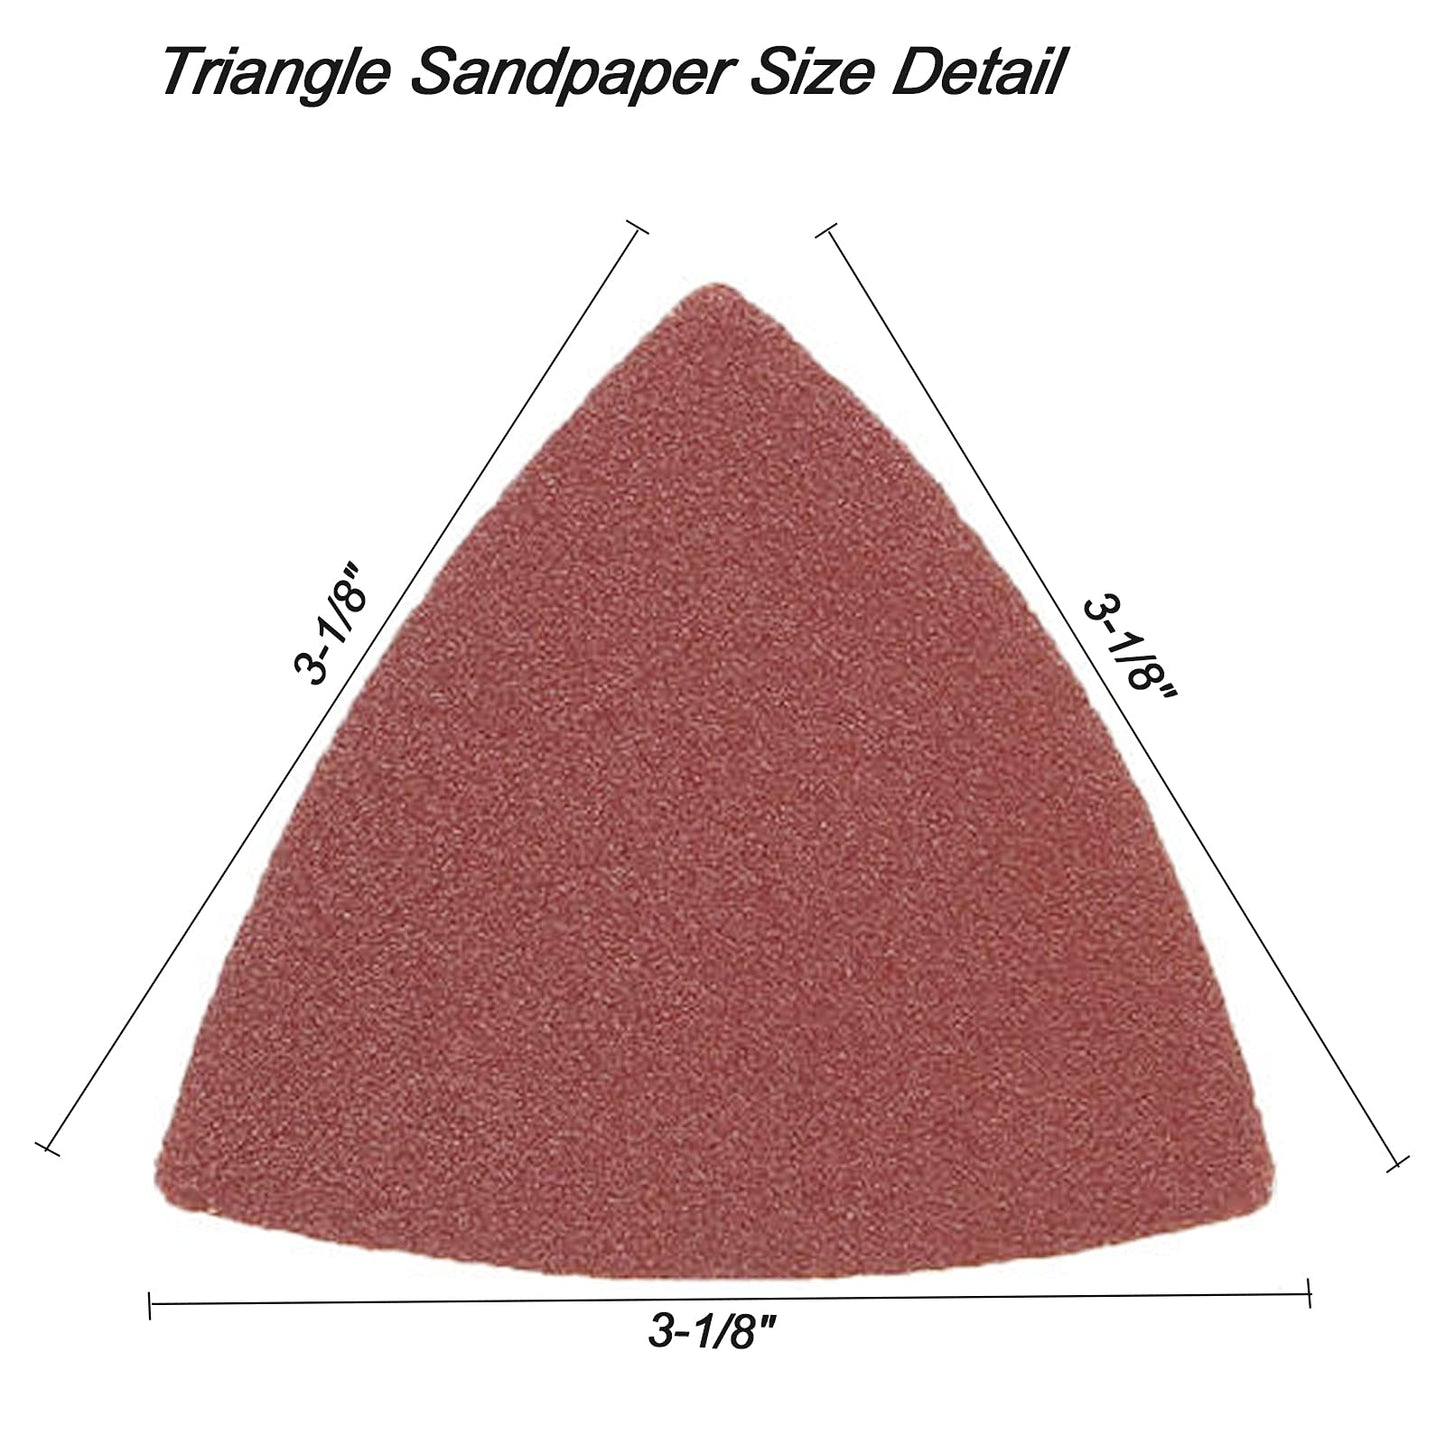 Triangle Sanding Pads Detail Sander Sandpaper for Oscillating 3-1/8 Inch Assorted Triangle Sandpaper 40/60/80/120/180/240 Grit Fit for Finishing Wood